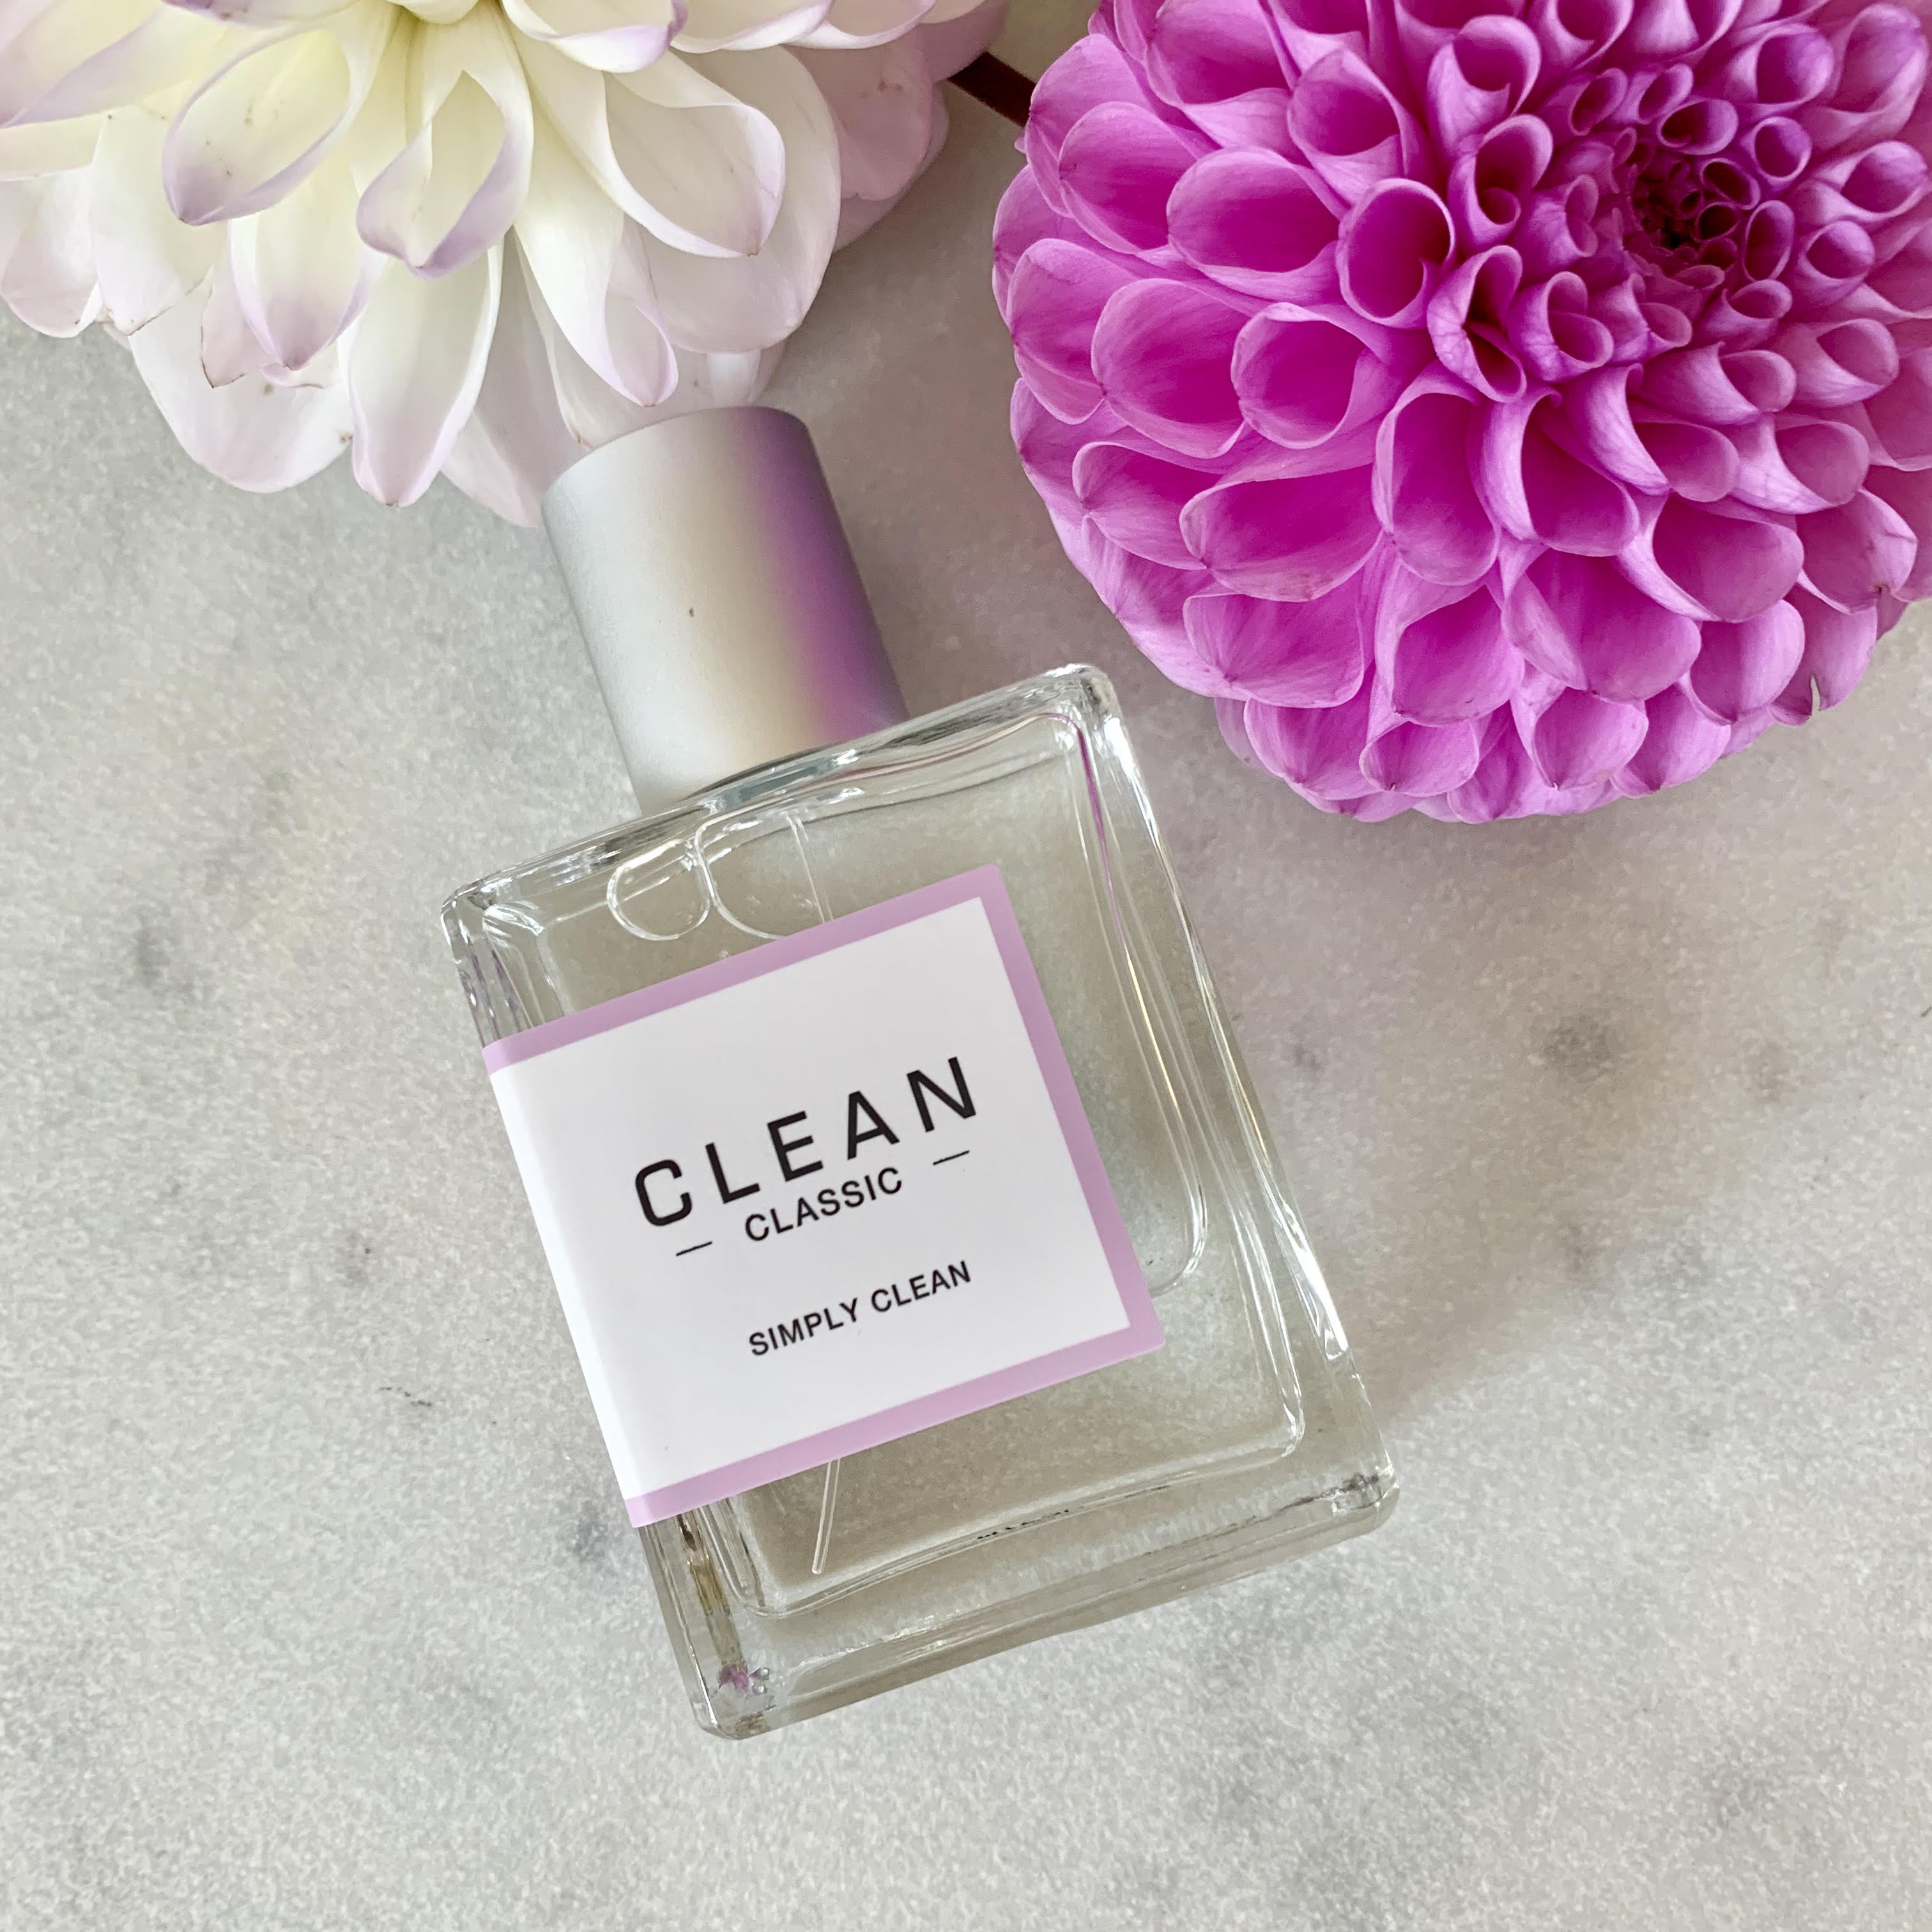 Perseus Bangladesh importere Vind den nye Simply Clean parfume · By Silke Grane